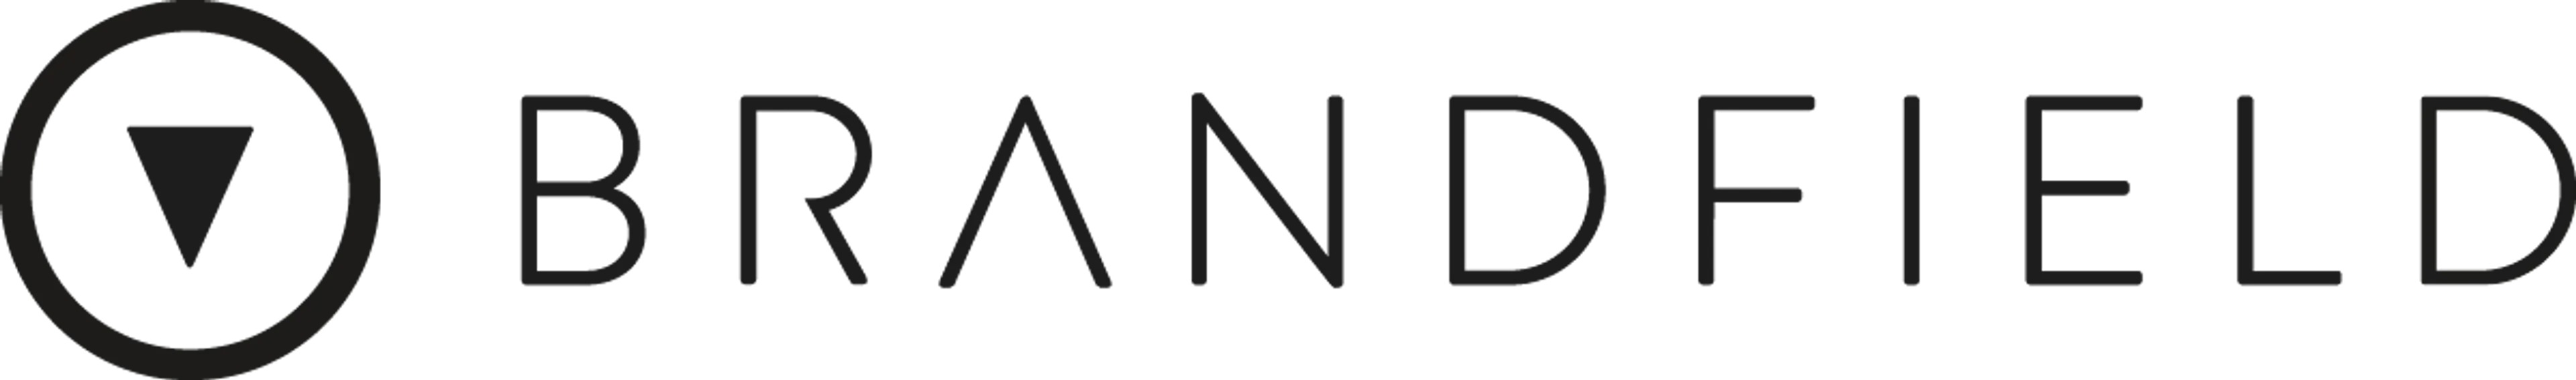 BRANDFIELD logo